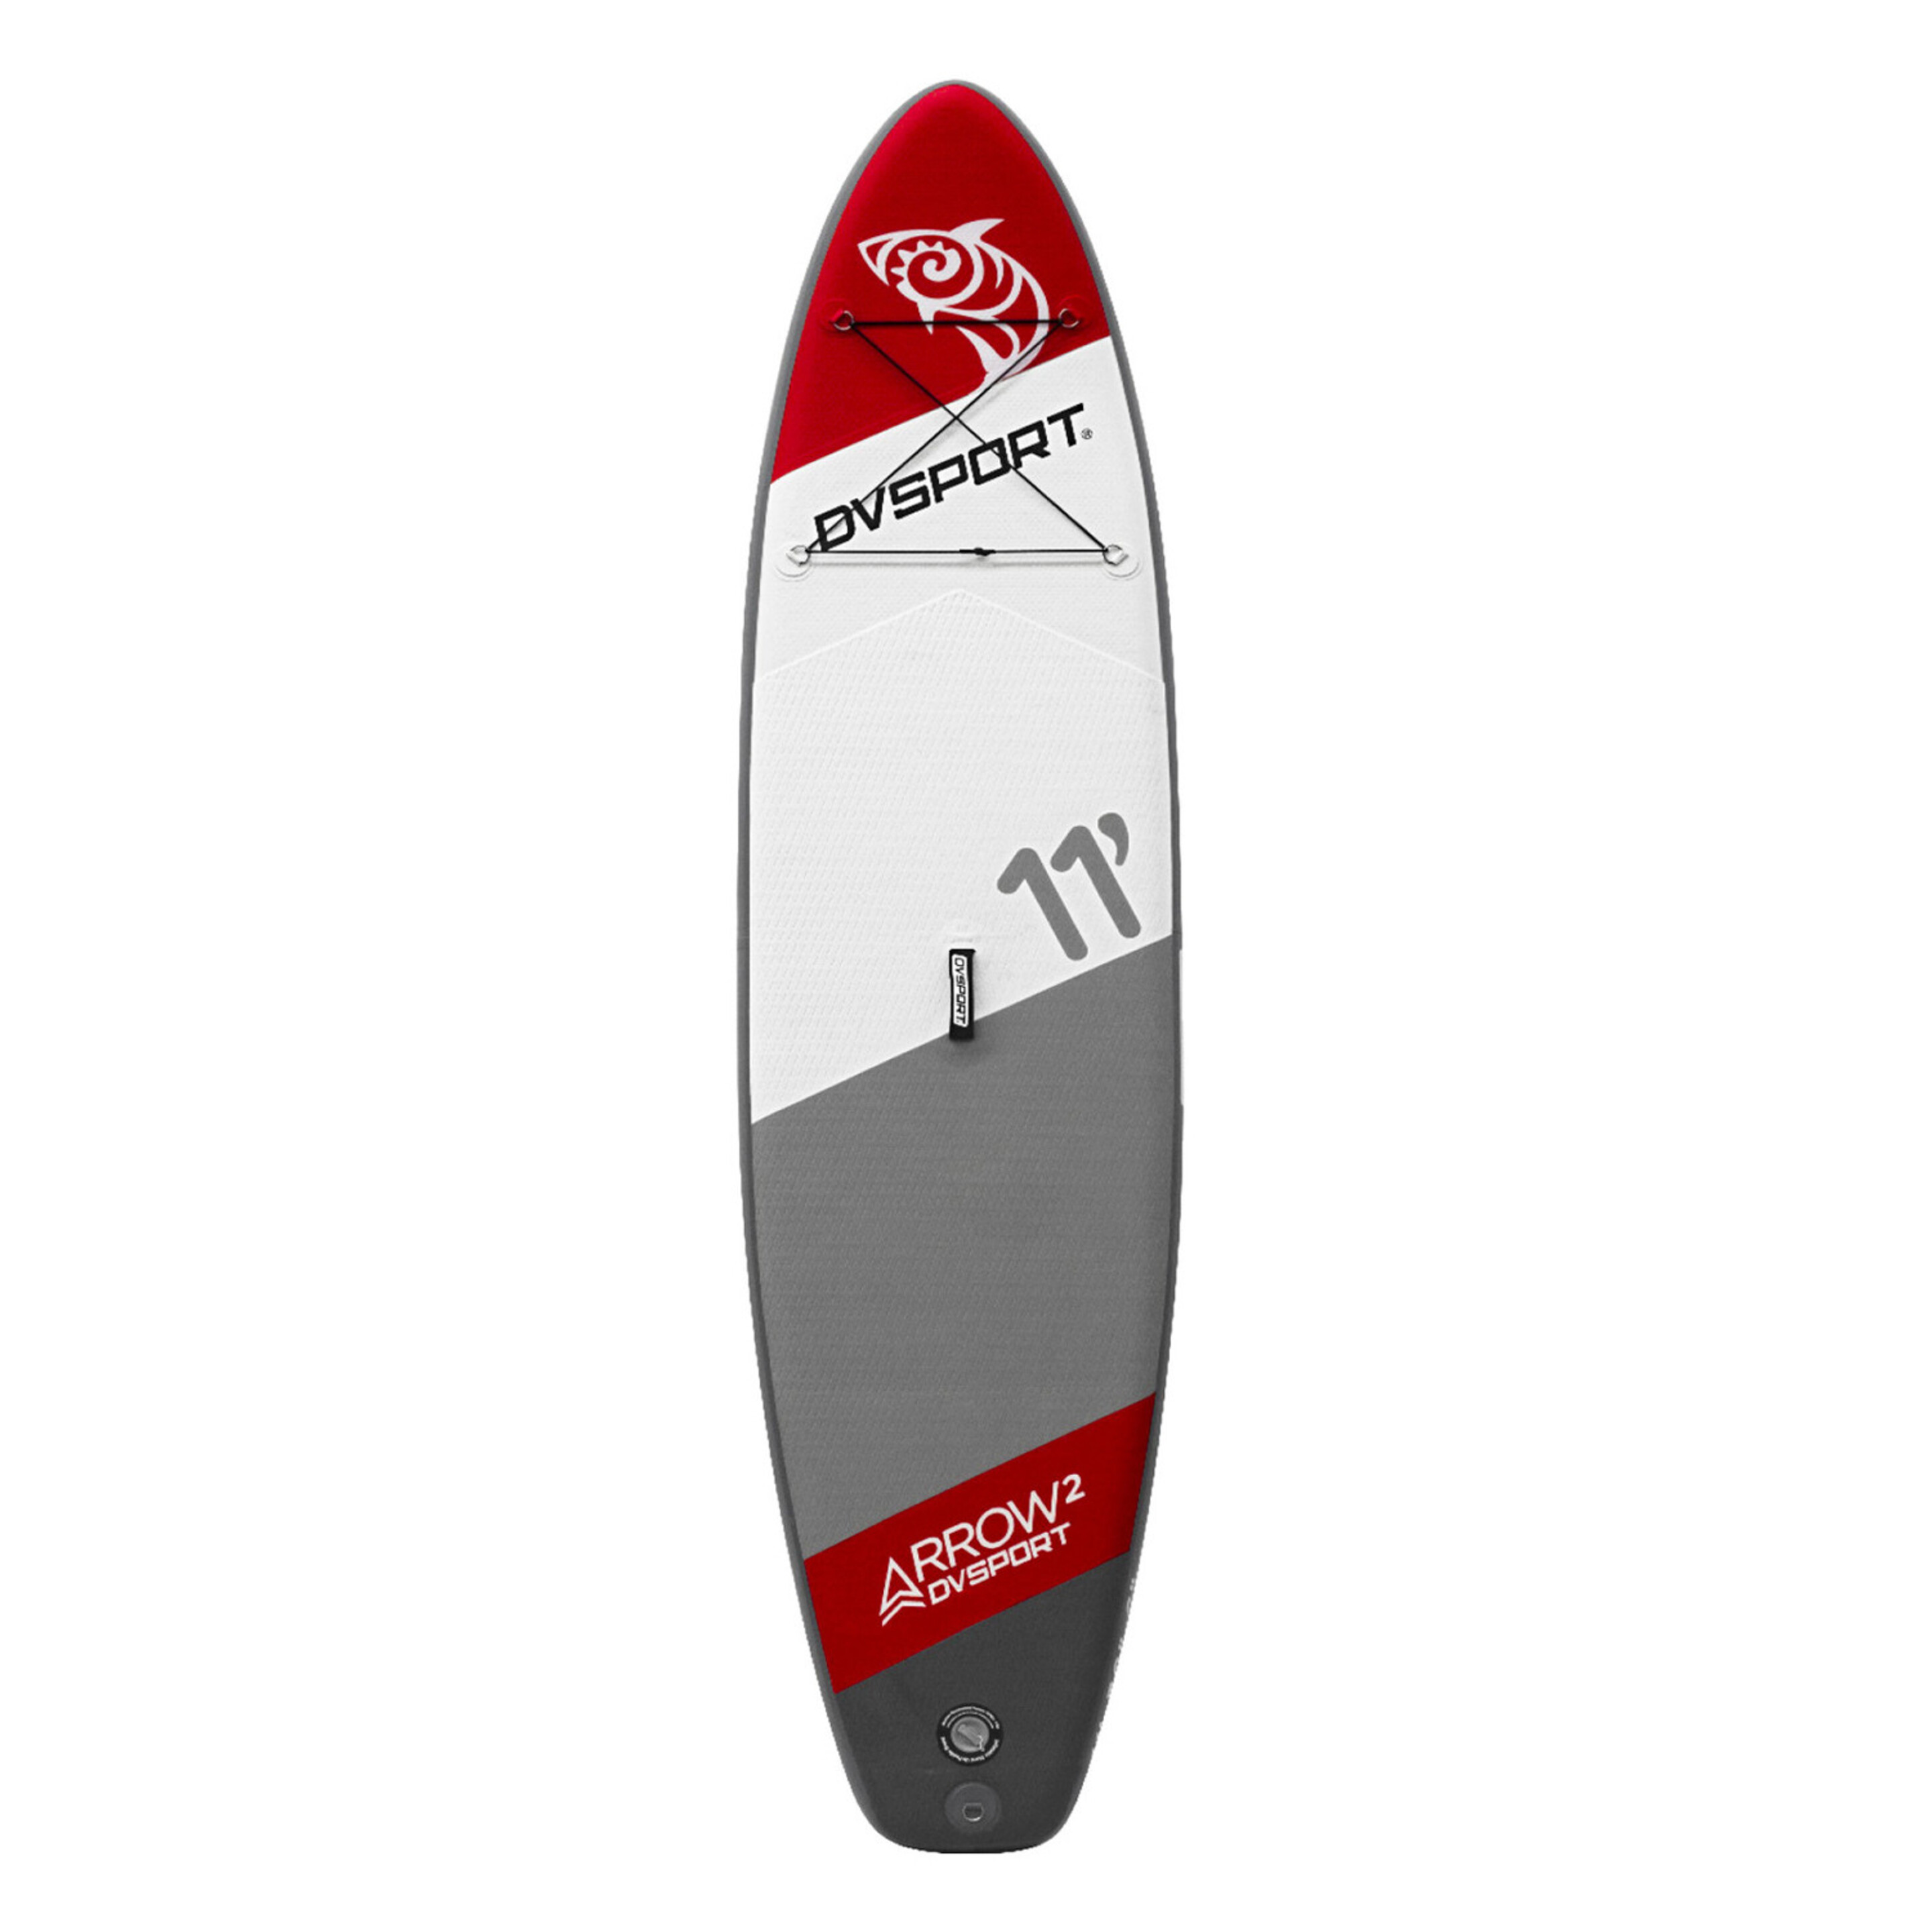 Tabla Paddlesurf Dvsport Arrow 2